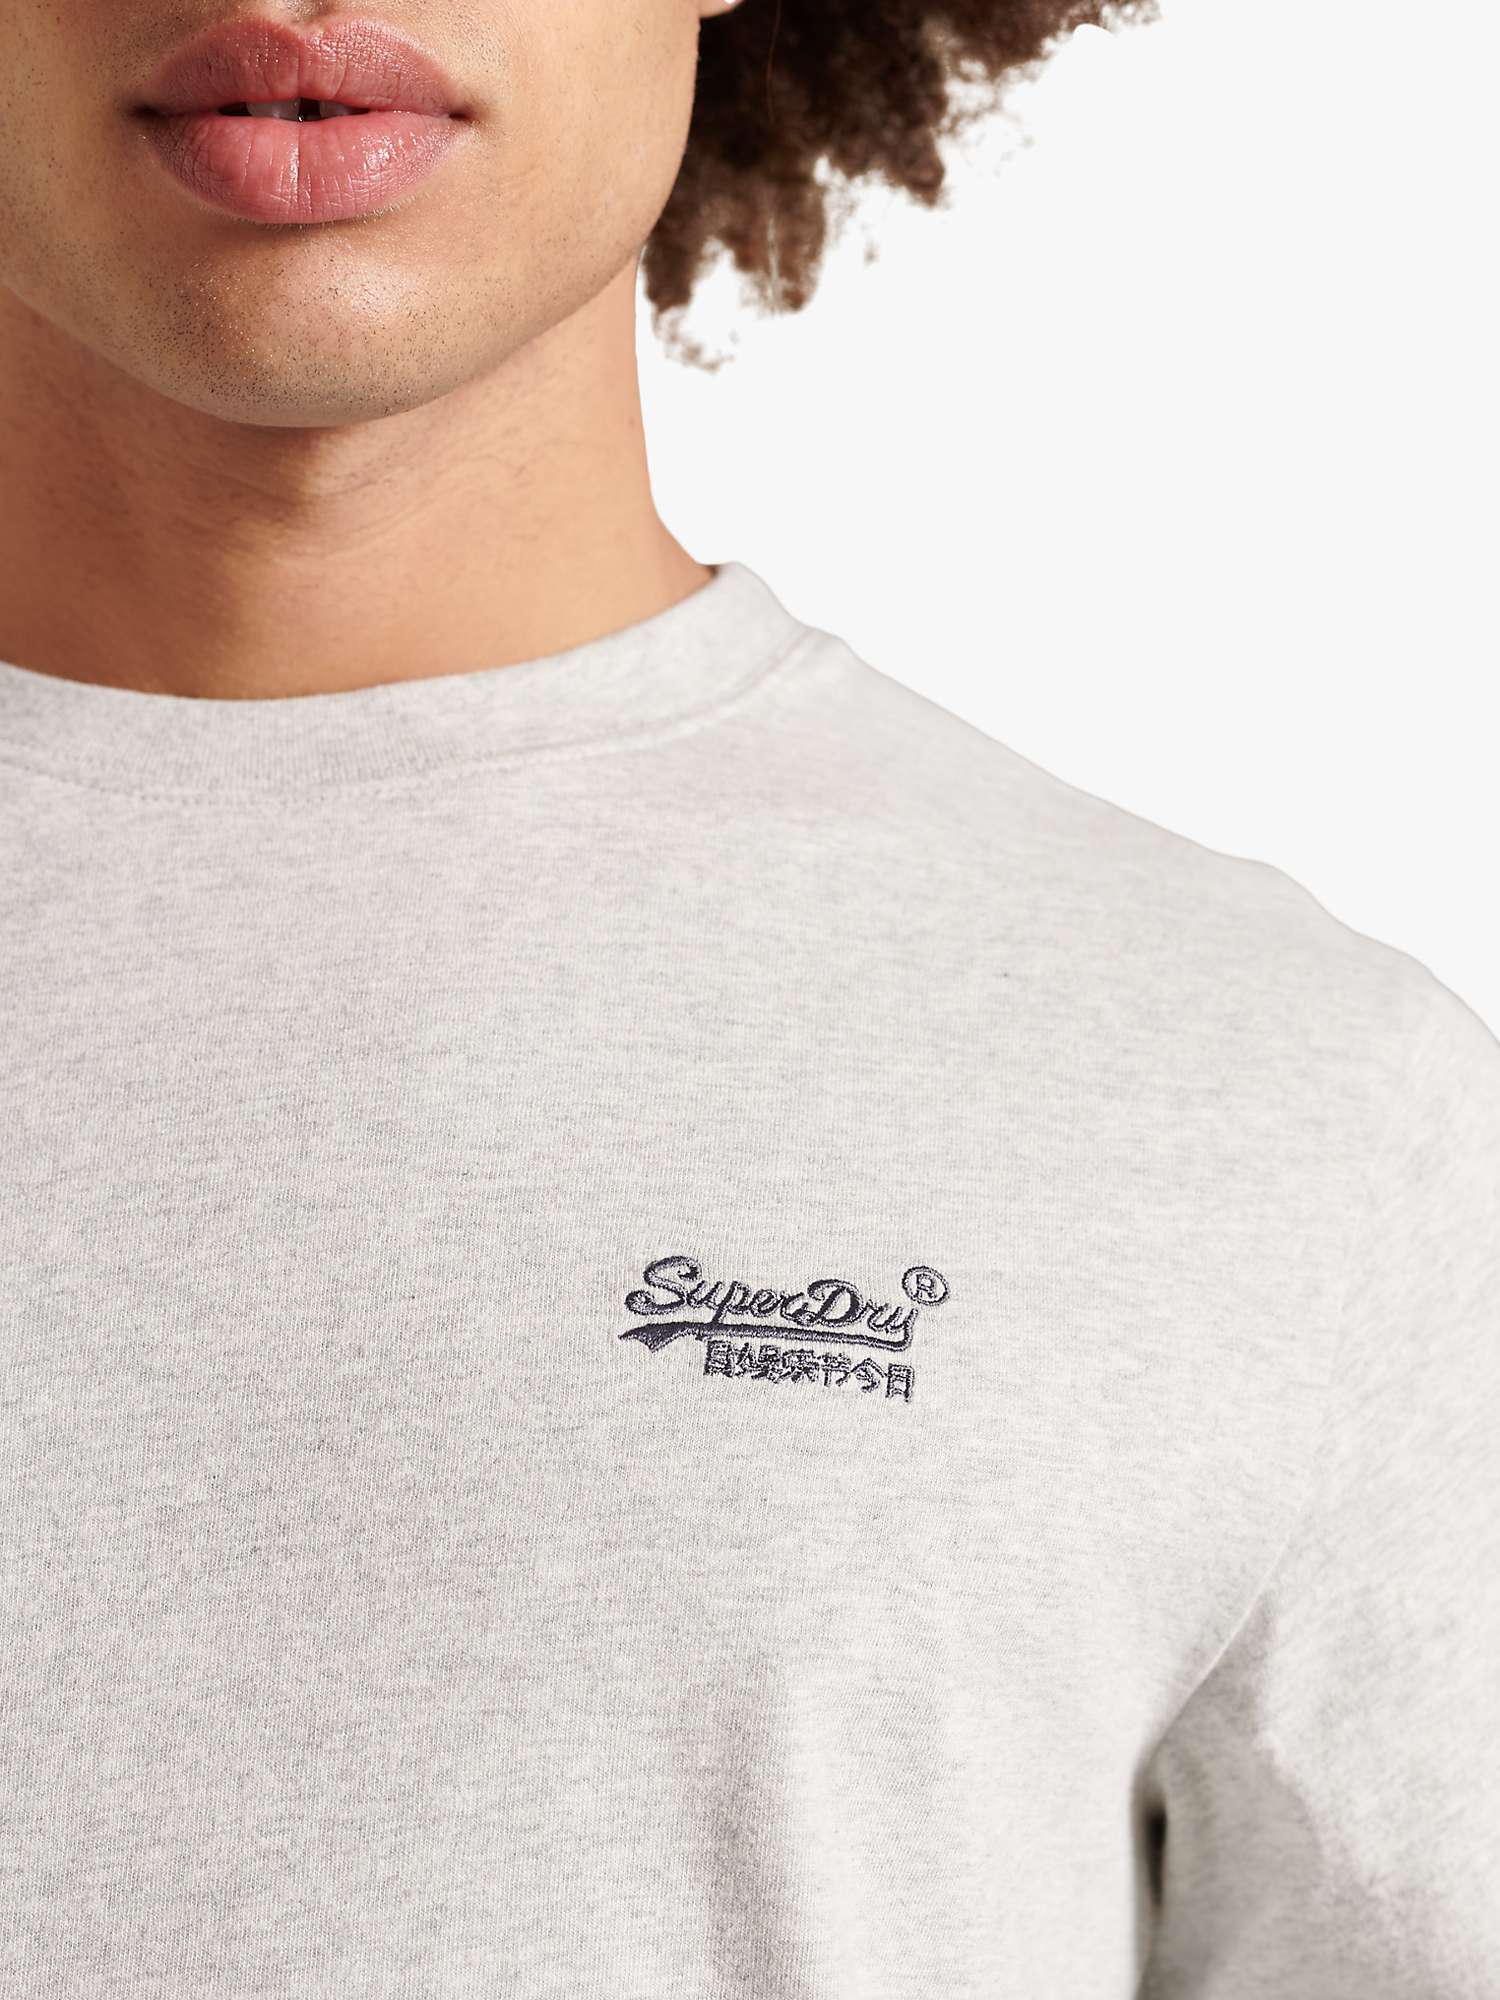 Buy Superdry Organic Cotton Vintage Logo Long Sleeve T-Shirt Online at johnlewis.com